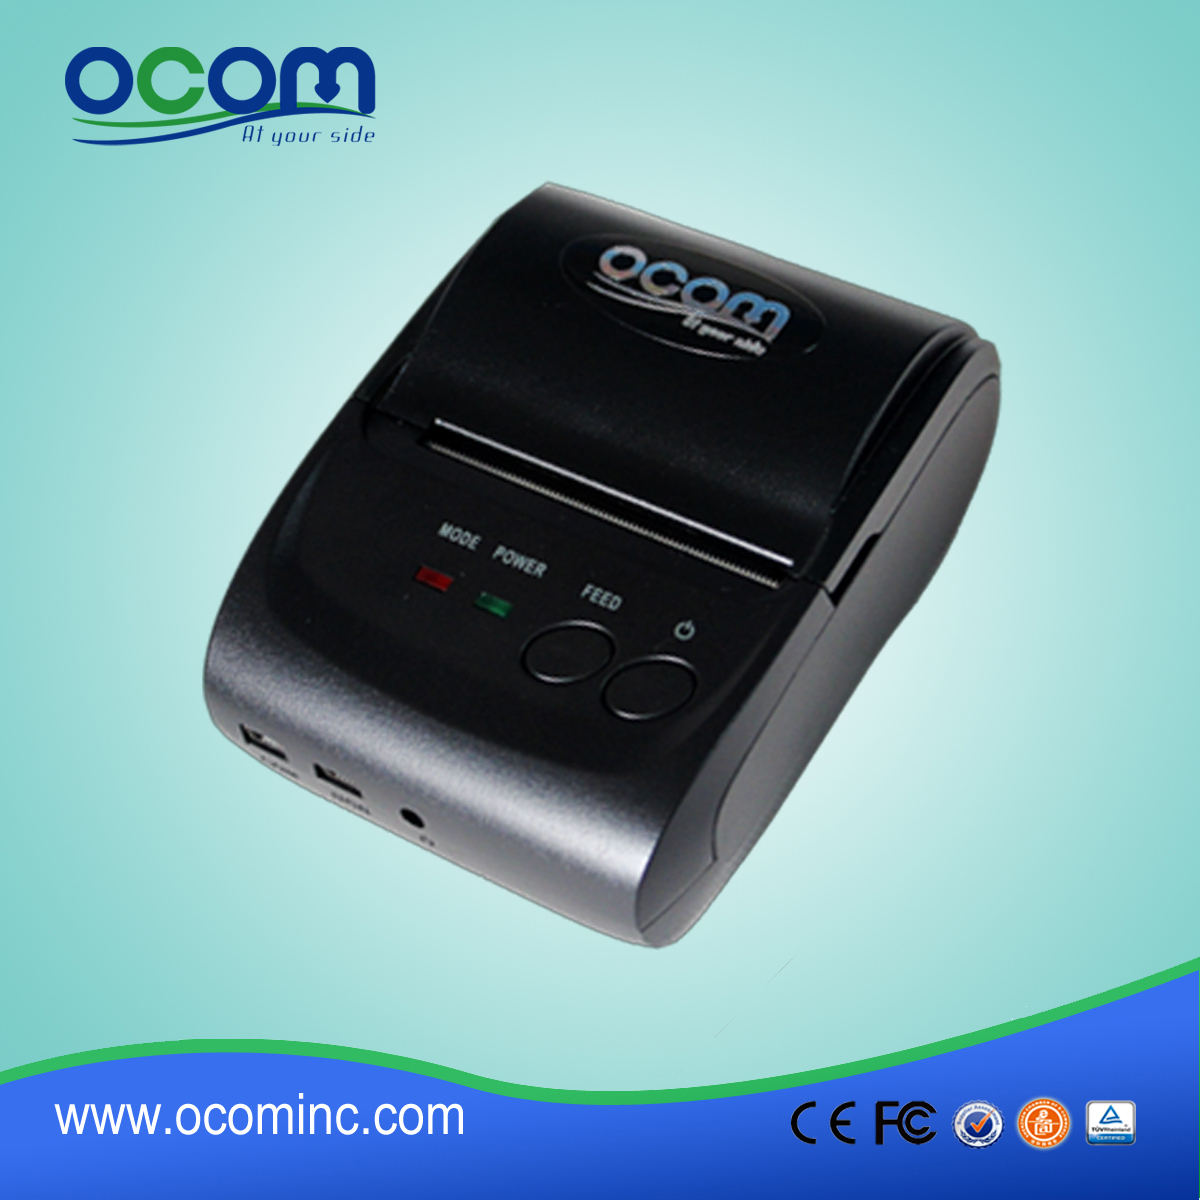 OCPP-M05: portatili Stampante termica 58 millimetri Bluetooth con SDK